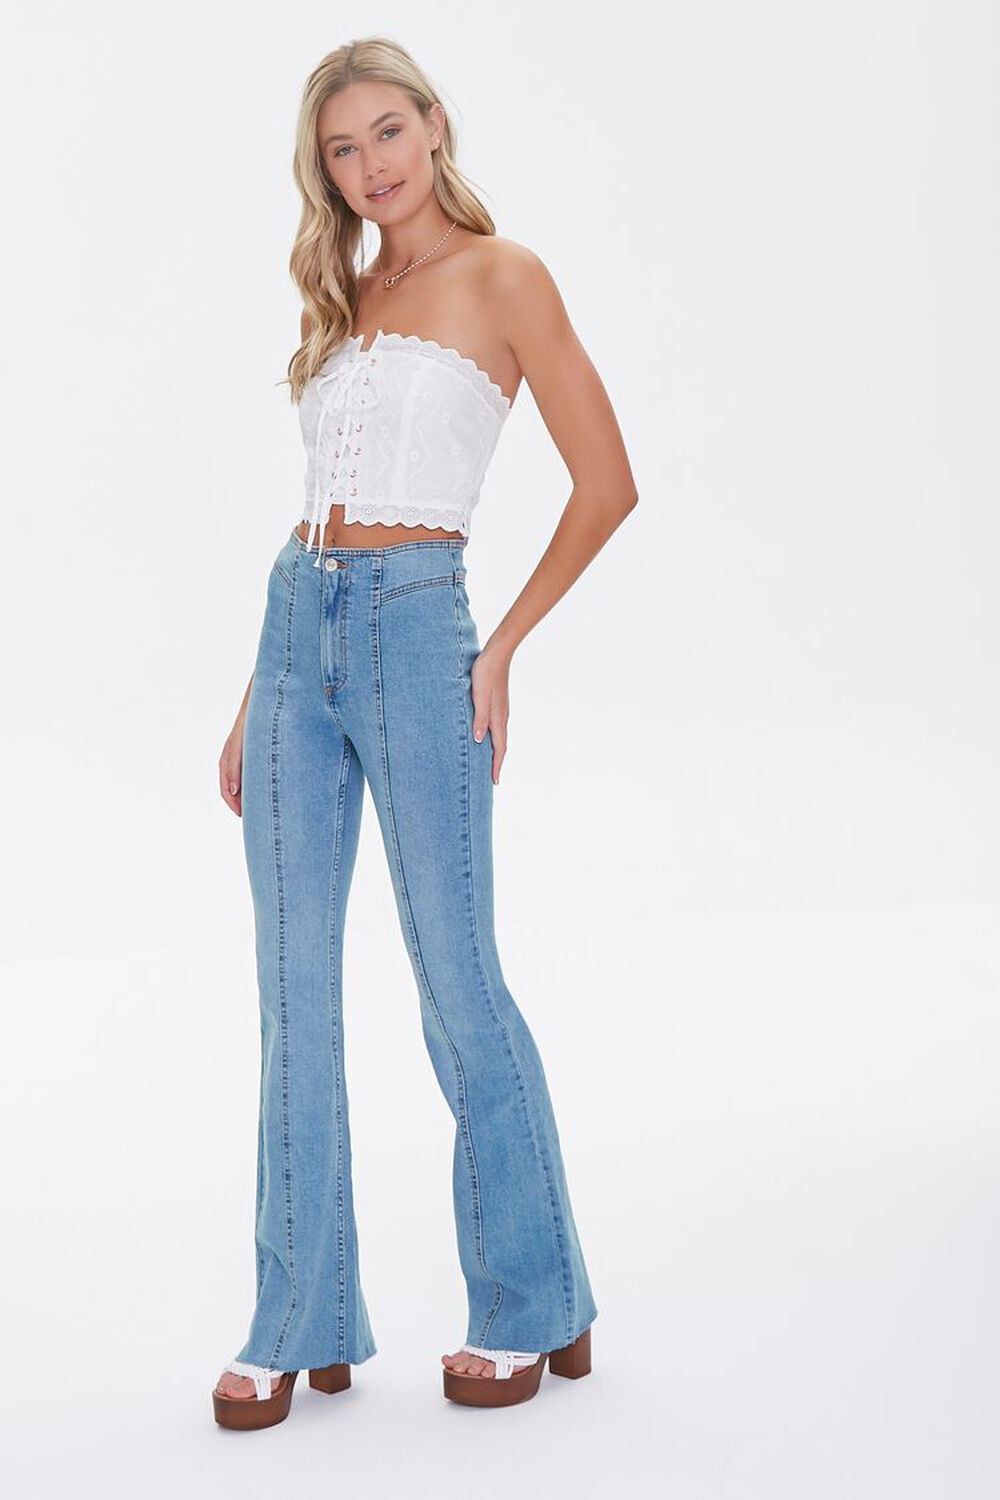 MEDIUM DENIM High-Rise Flare Jeans, image 1